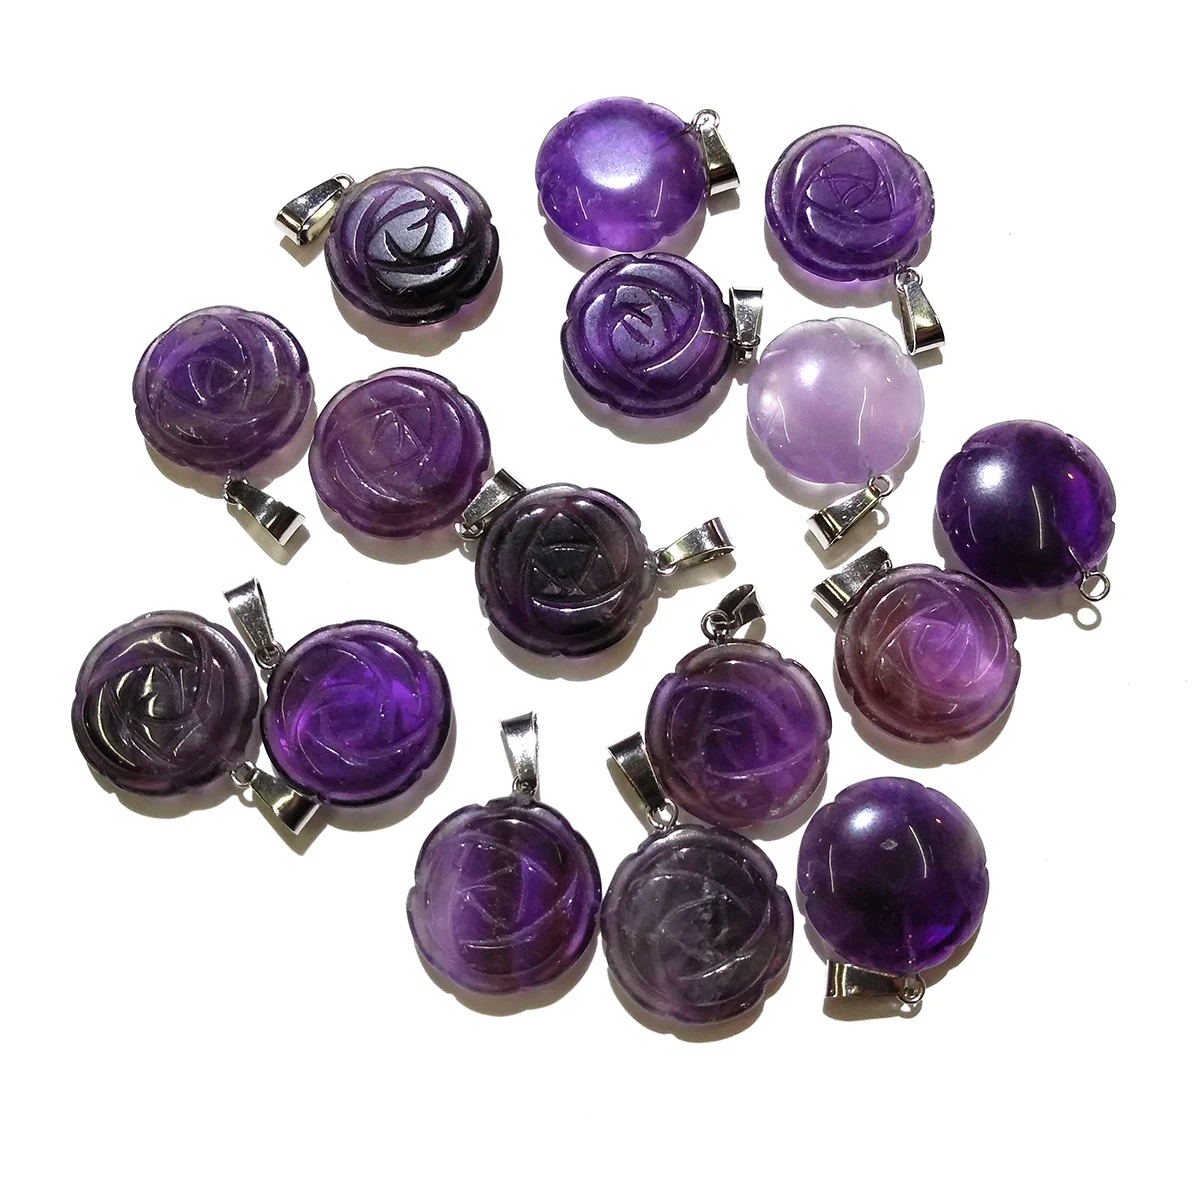 

1PC Rose-shaped Purple Quartzs Pendant Necklace Reiki Healing Natural Stone Amulet DIY Jewelry Personality Gift Size 20mm